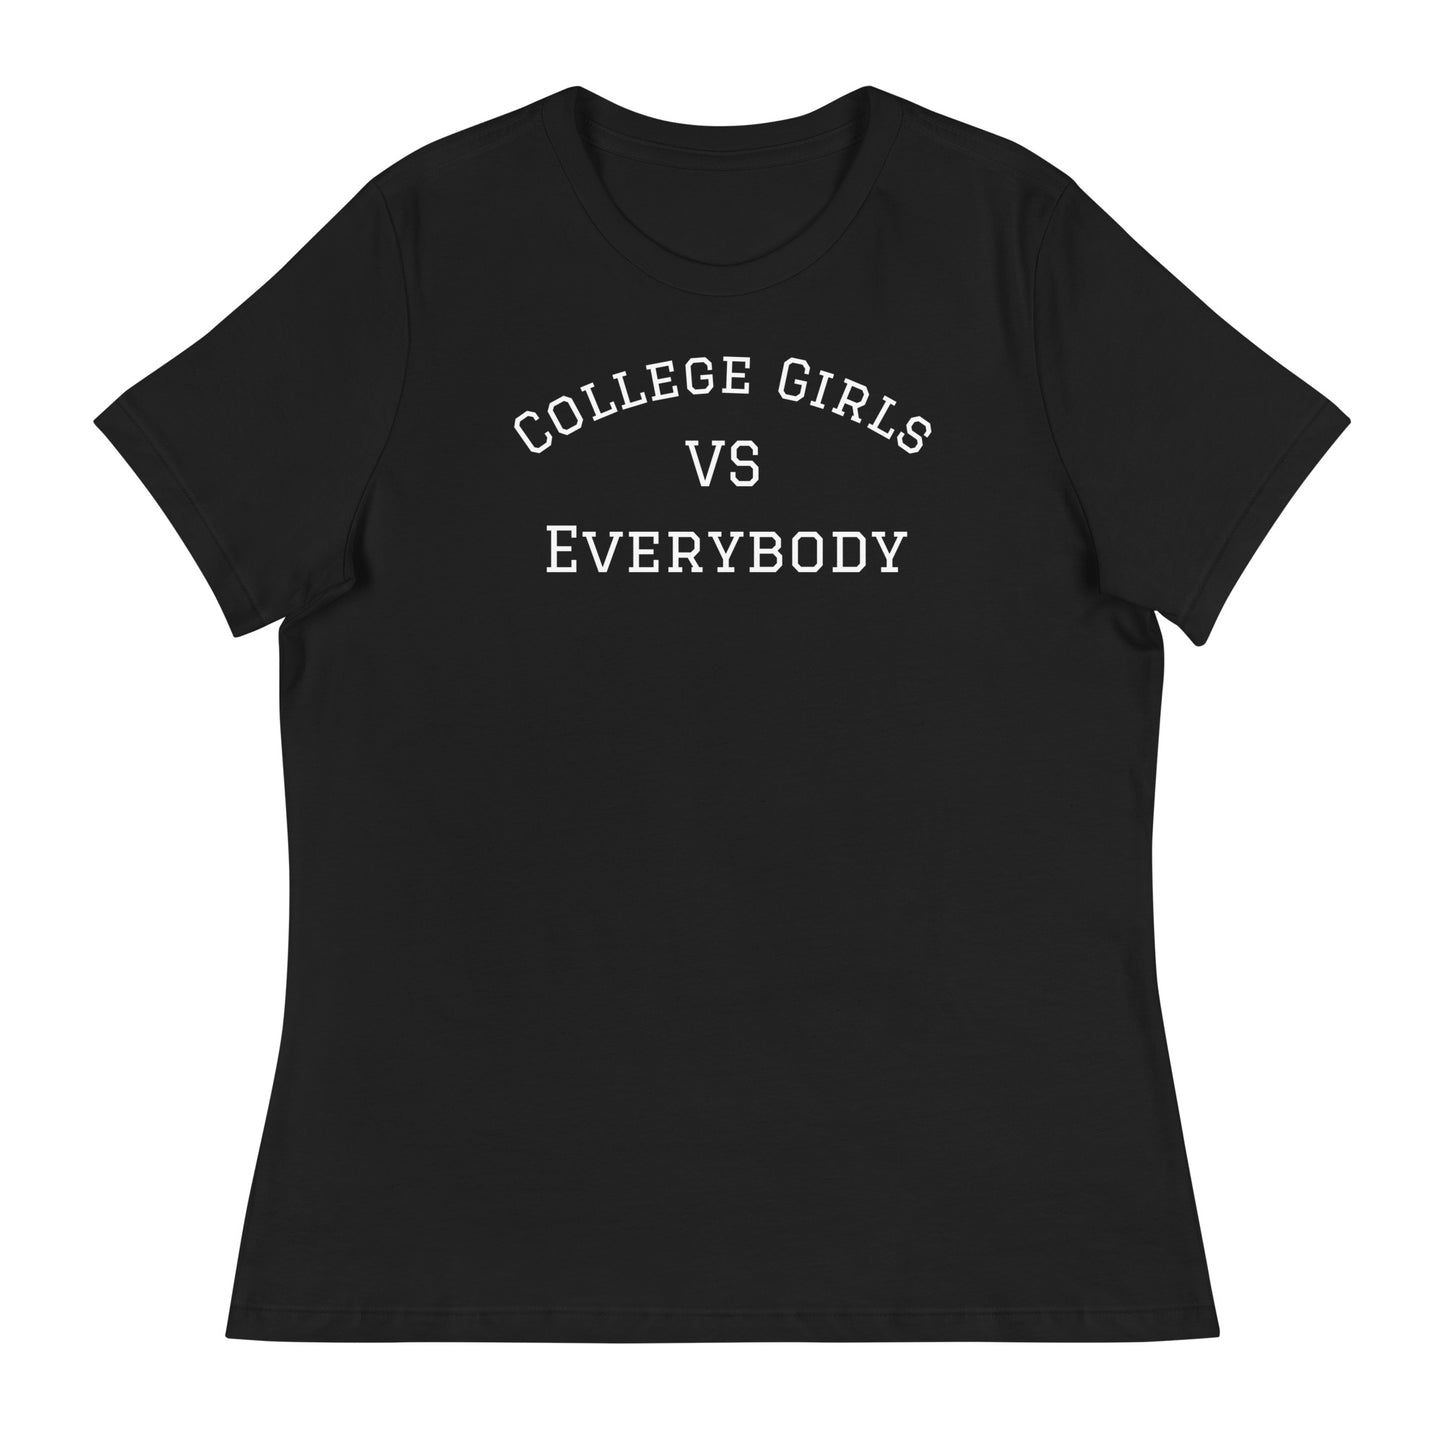 Best women's short sleeve college-casual black tee shirt that celebrates college girls